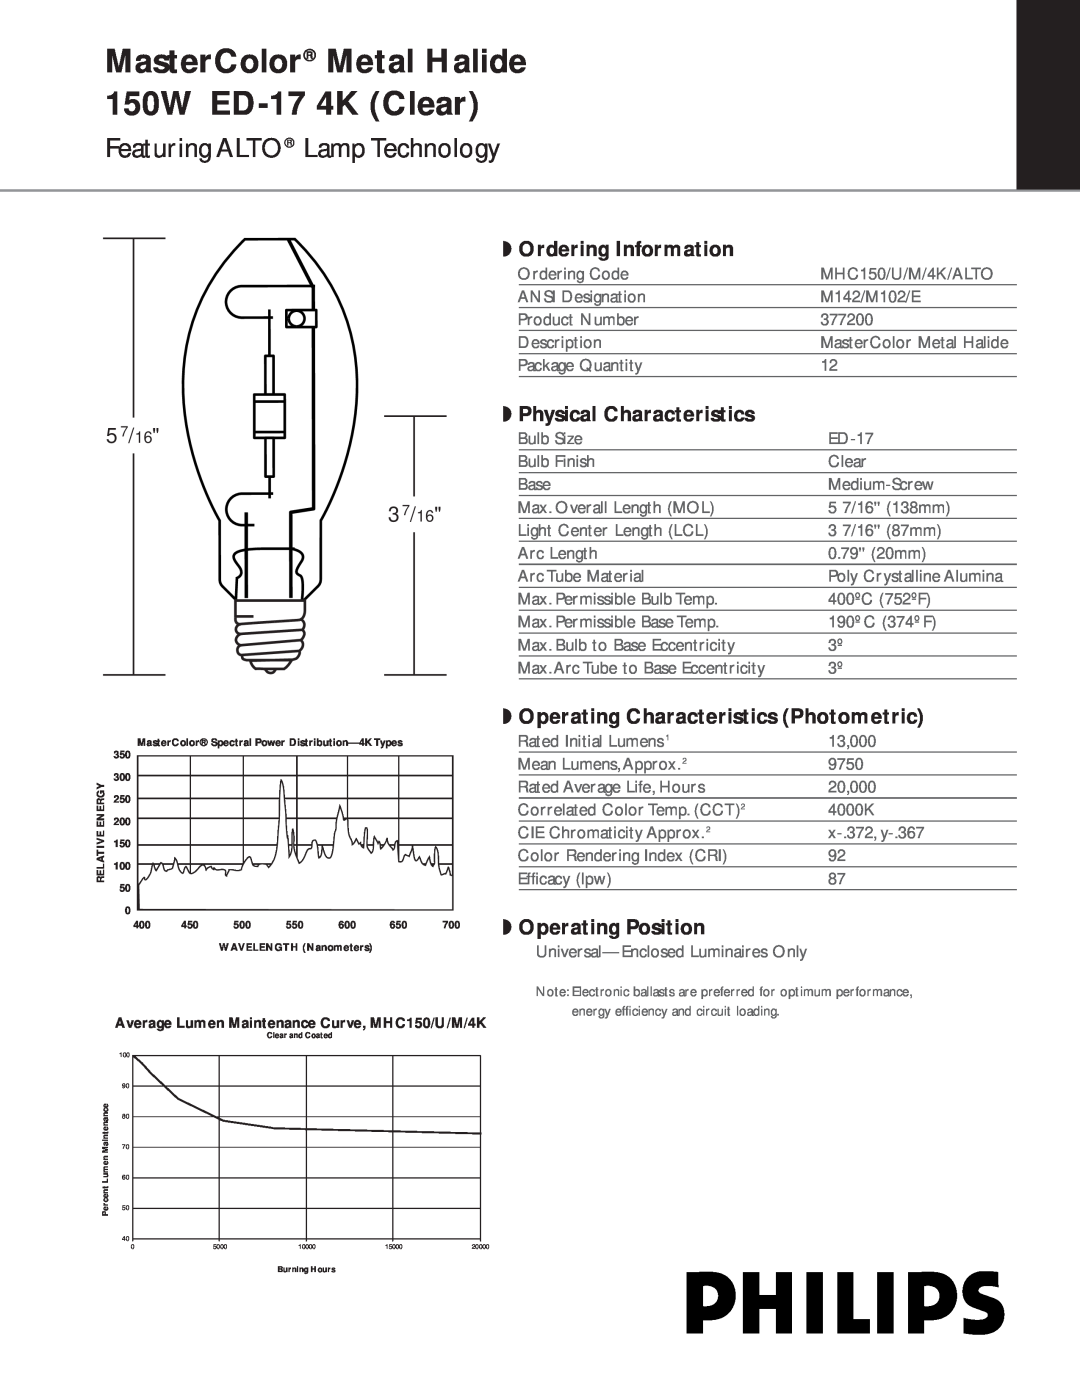 Philips 377200 manual Ordering Information, Physical Characteristics, Operating Characteristics Photometric, 3 7/16 